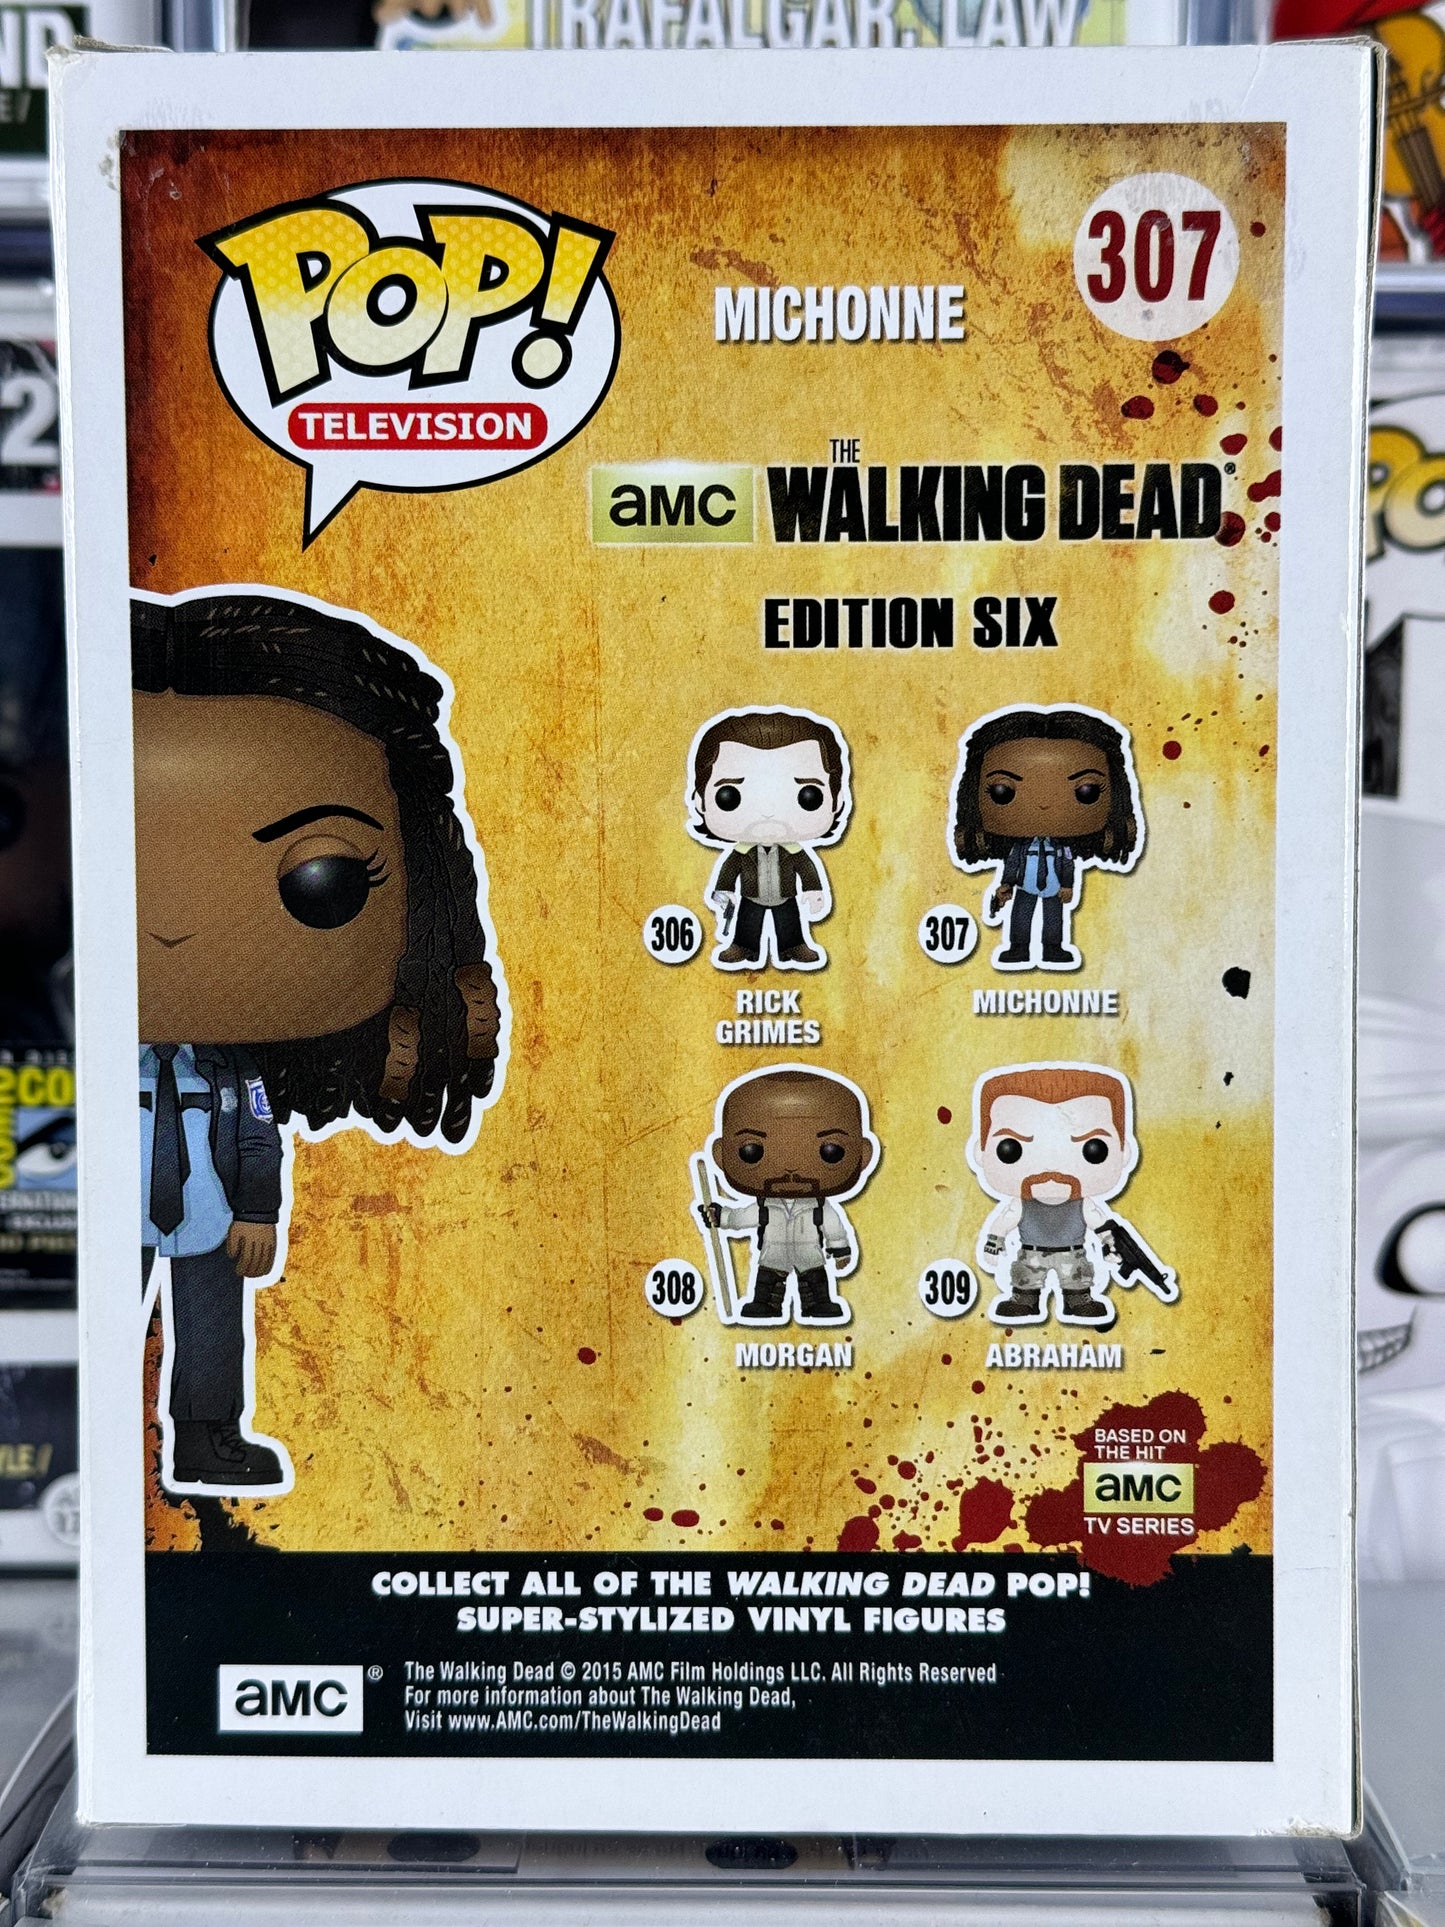 The Walking Dead - Michonne (Cop) (307) Vaulted